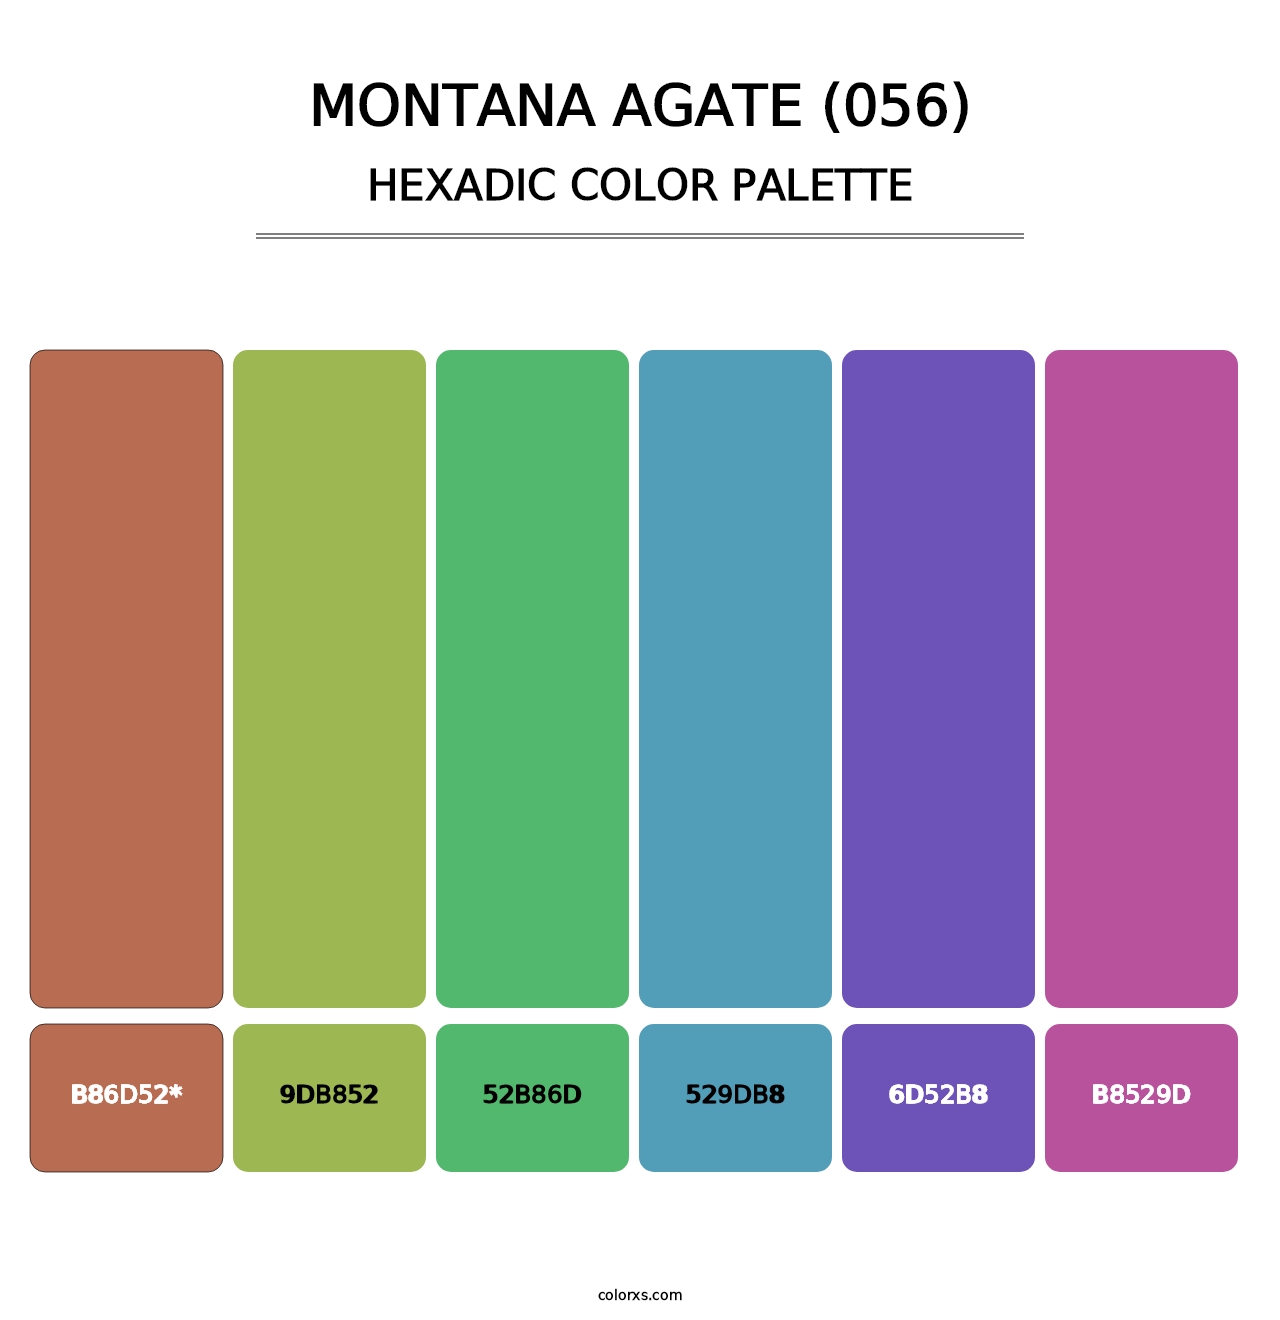 Montana Agate (056) - Hexadic Color Palette